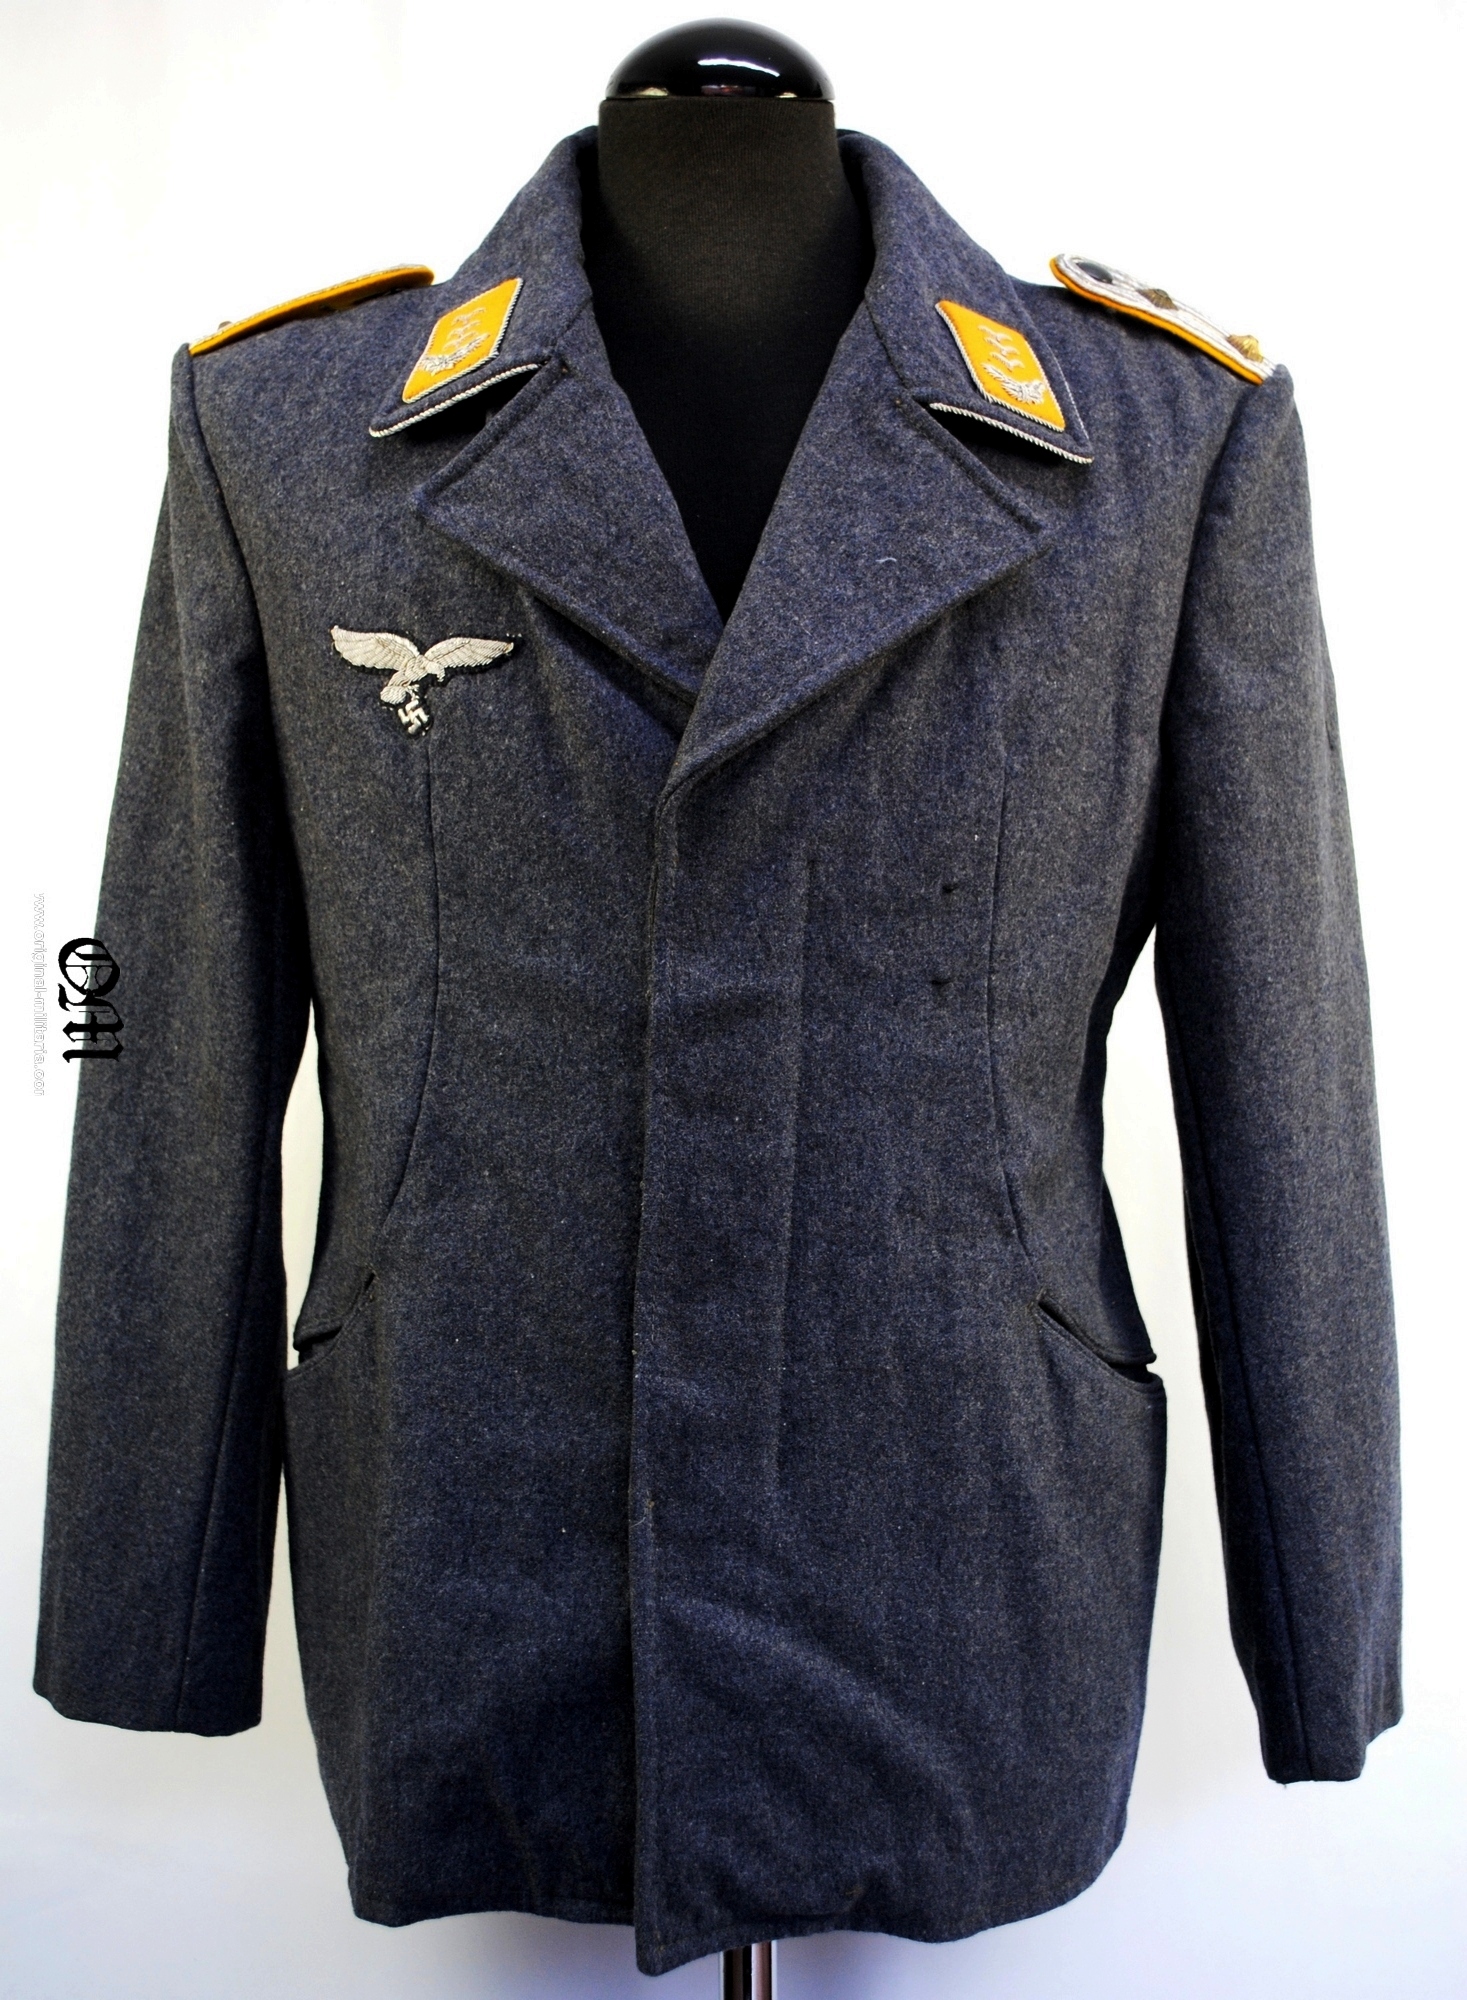 Pantalones de Oficial de la Luftwaffe de Compra Privada. Gran Talla.